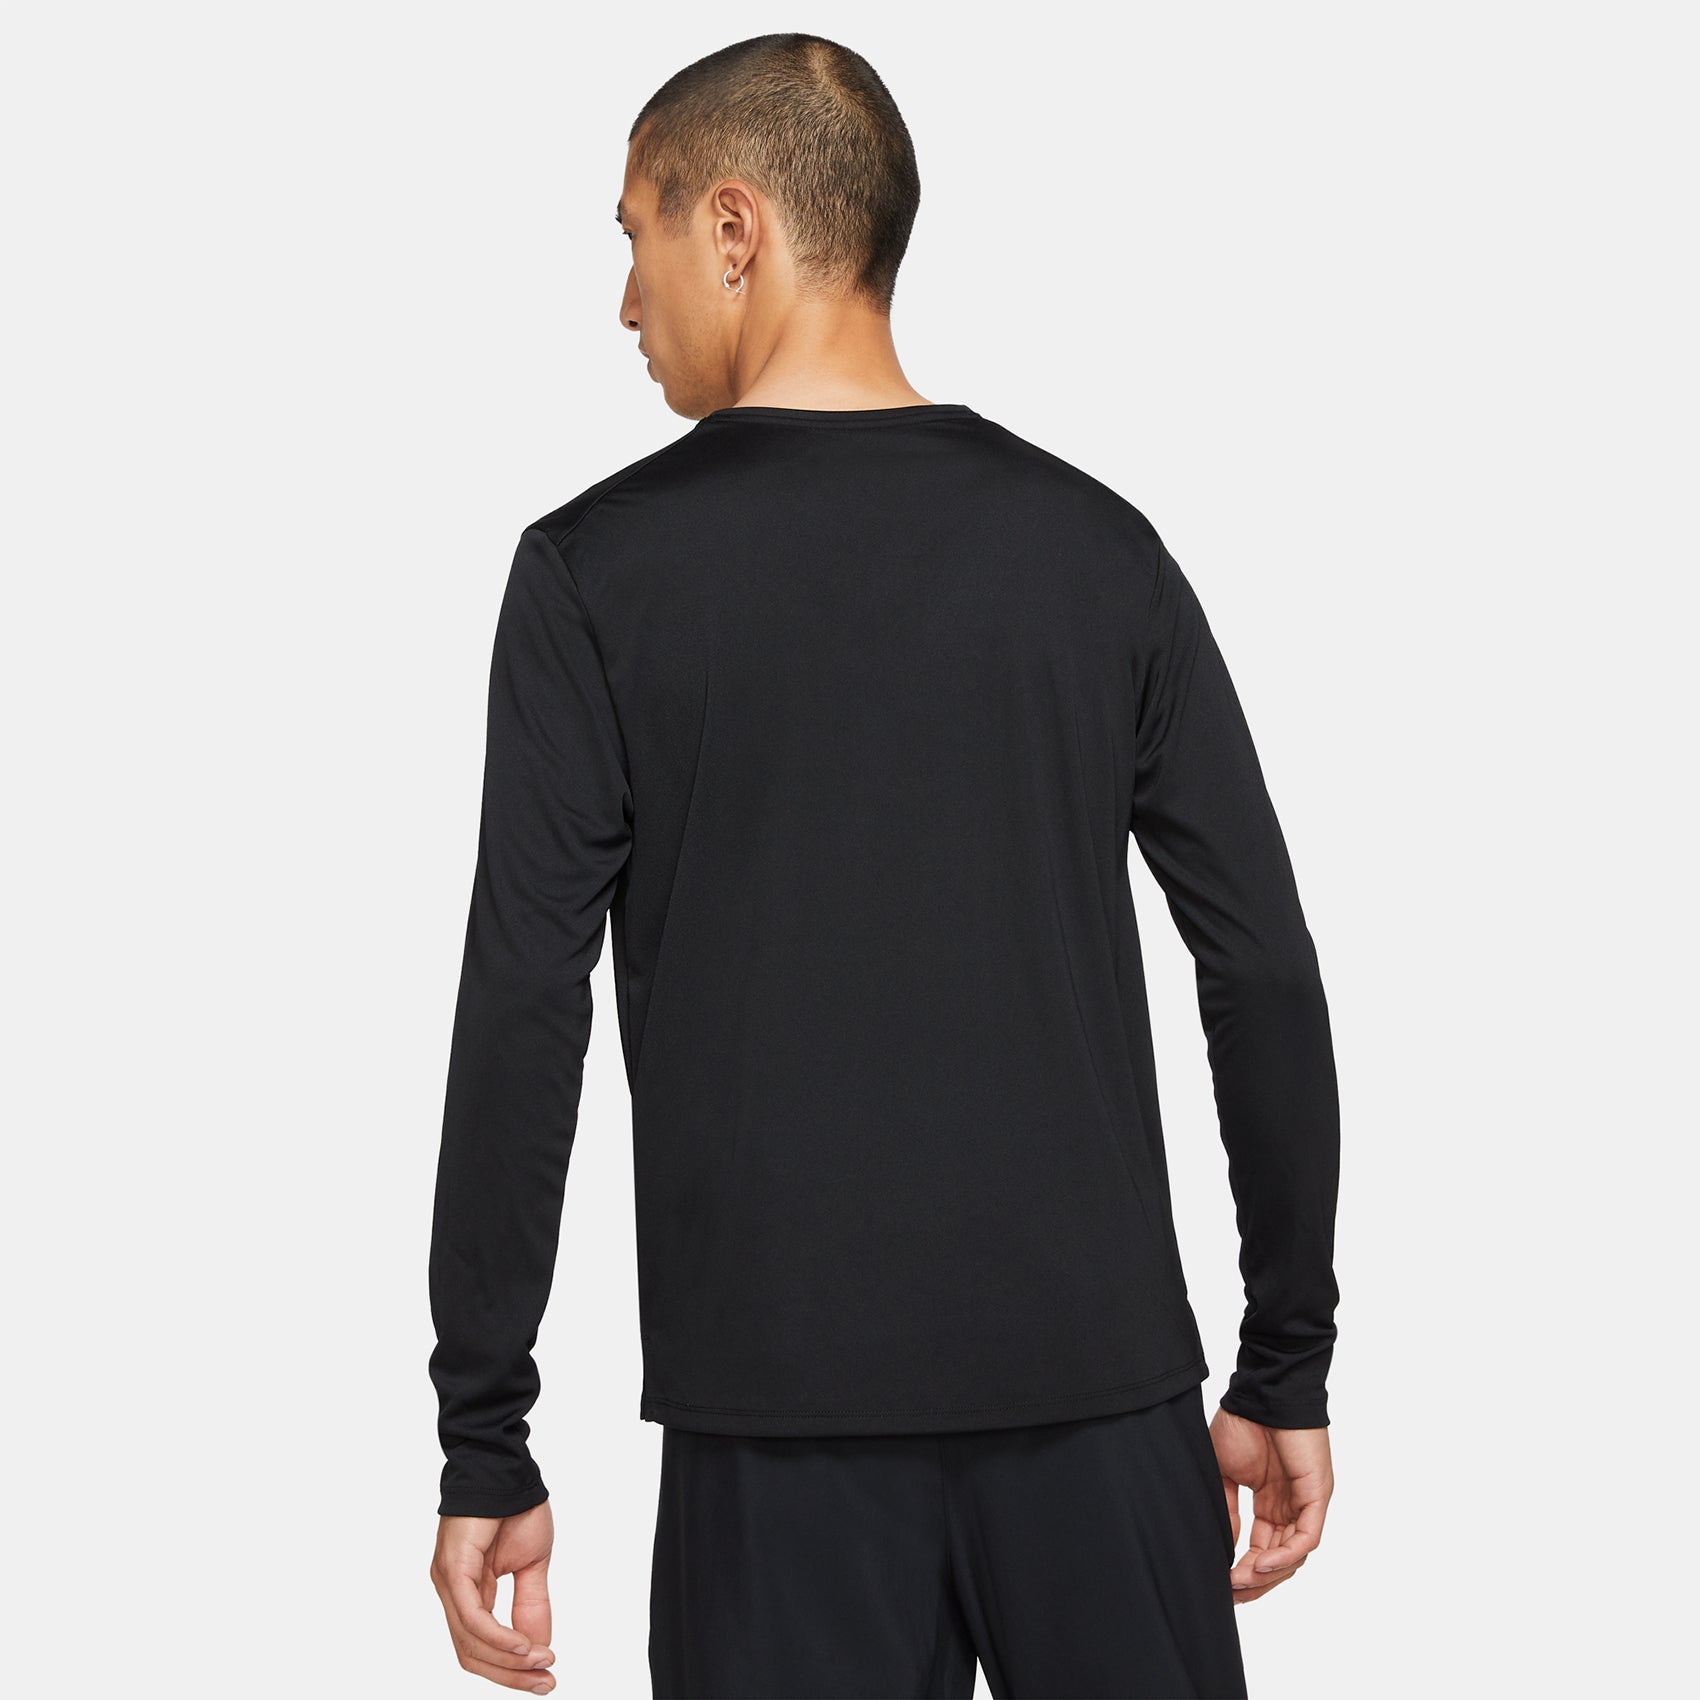 Men's Nike Dri-FIT Long Sleeve Running Top - Black/Reflective Si Gazelle Sports